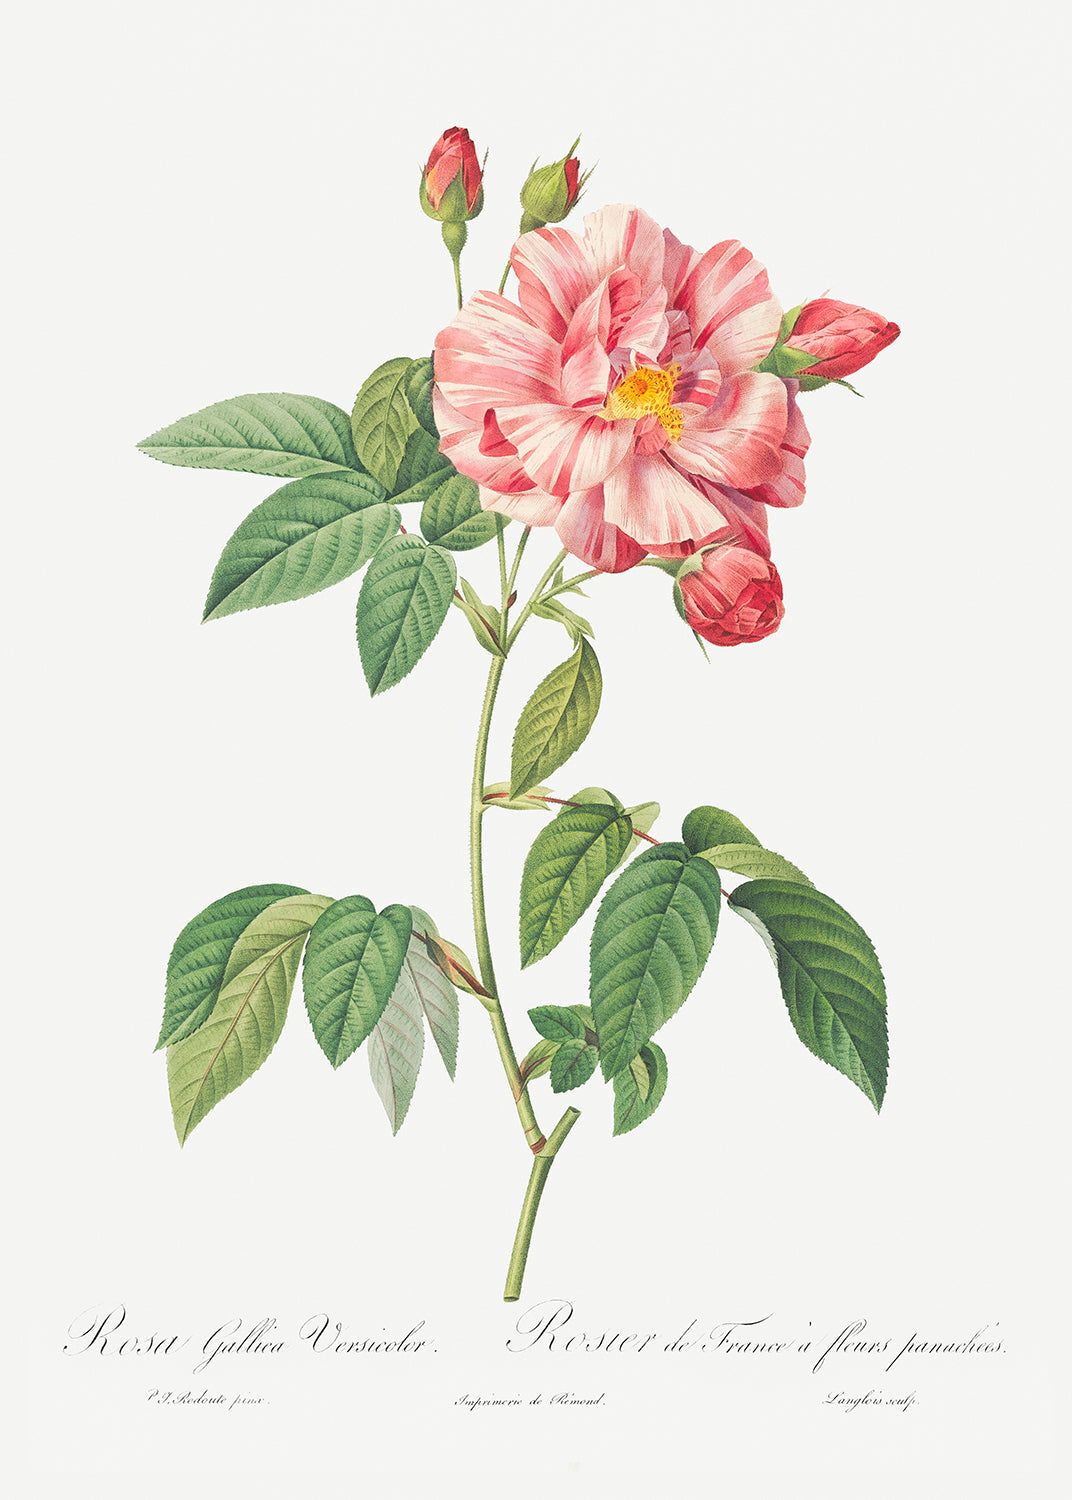 Botanical Plant Print - Rosa Mundi, French Rosebush with Varigated Flowers (Rosa gallica versicolor) by Pierre Joseph Redoute